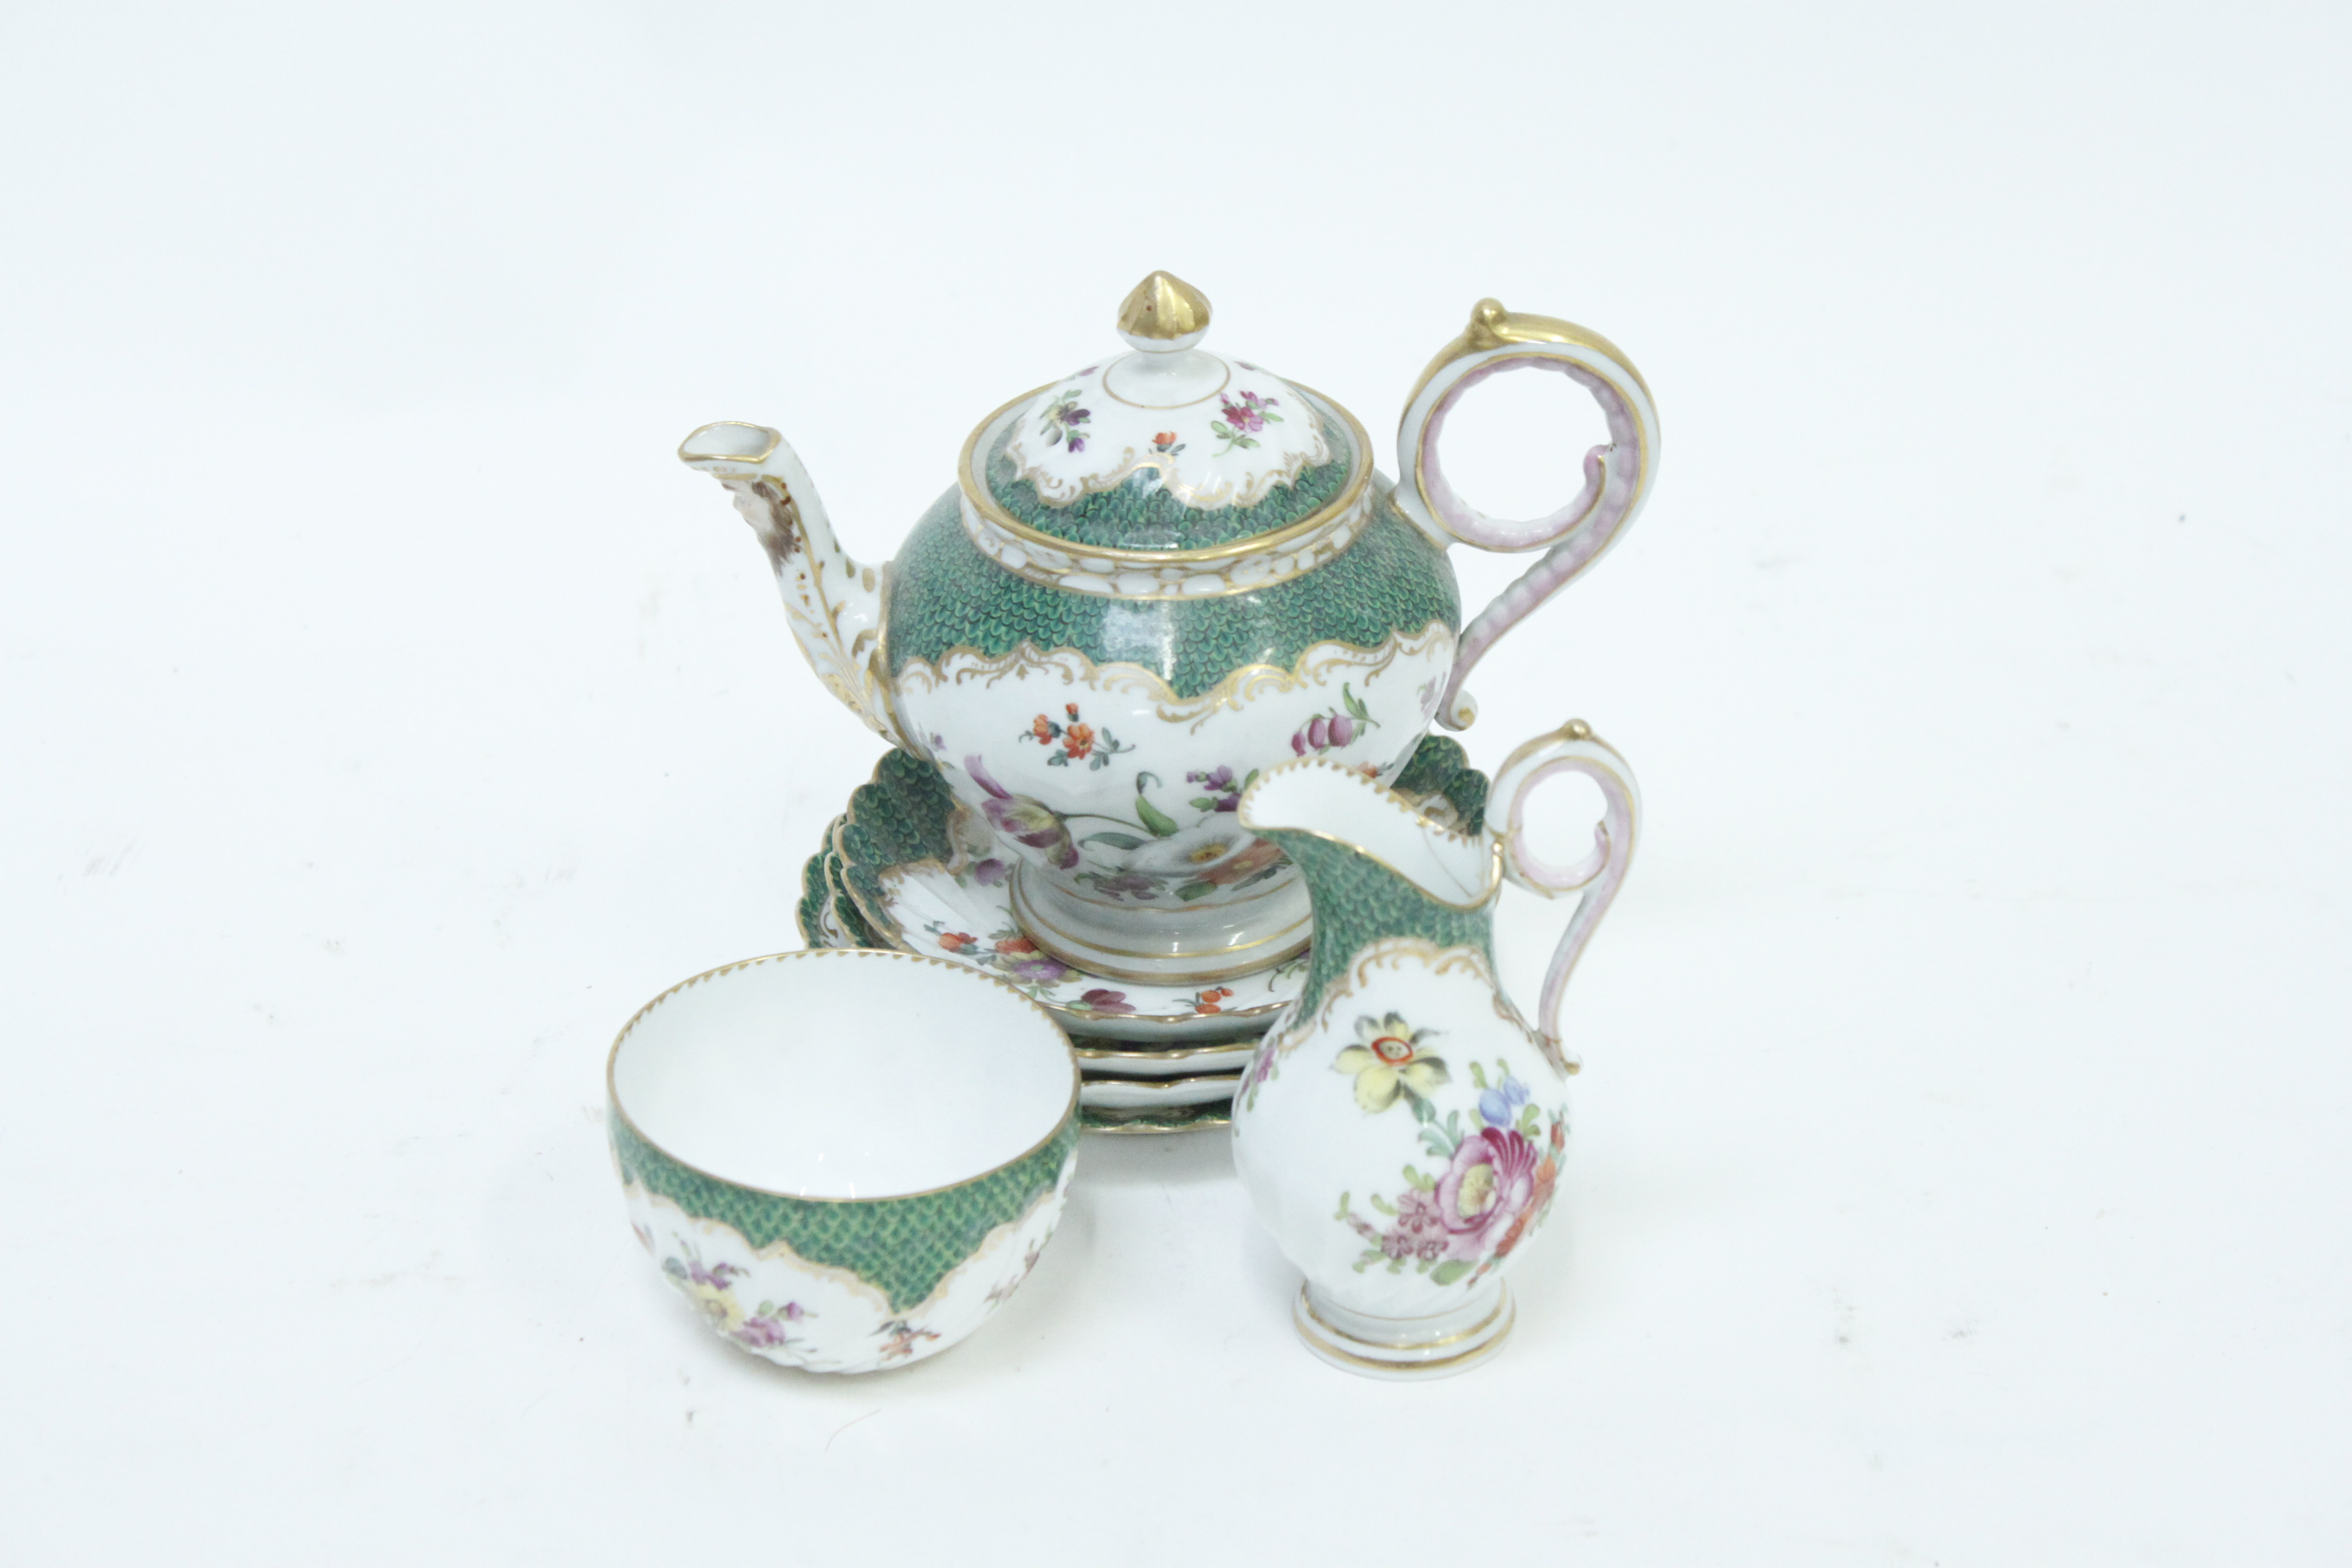 A Dresden teapot, cream jug, sugar bowl and four saucers